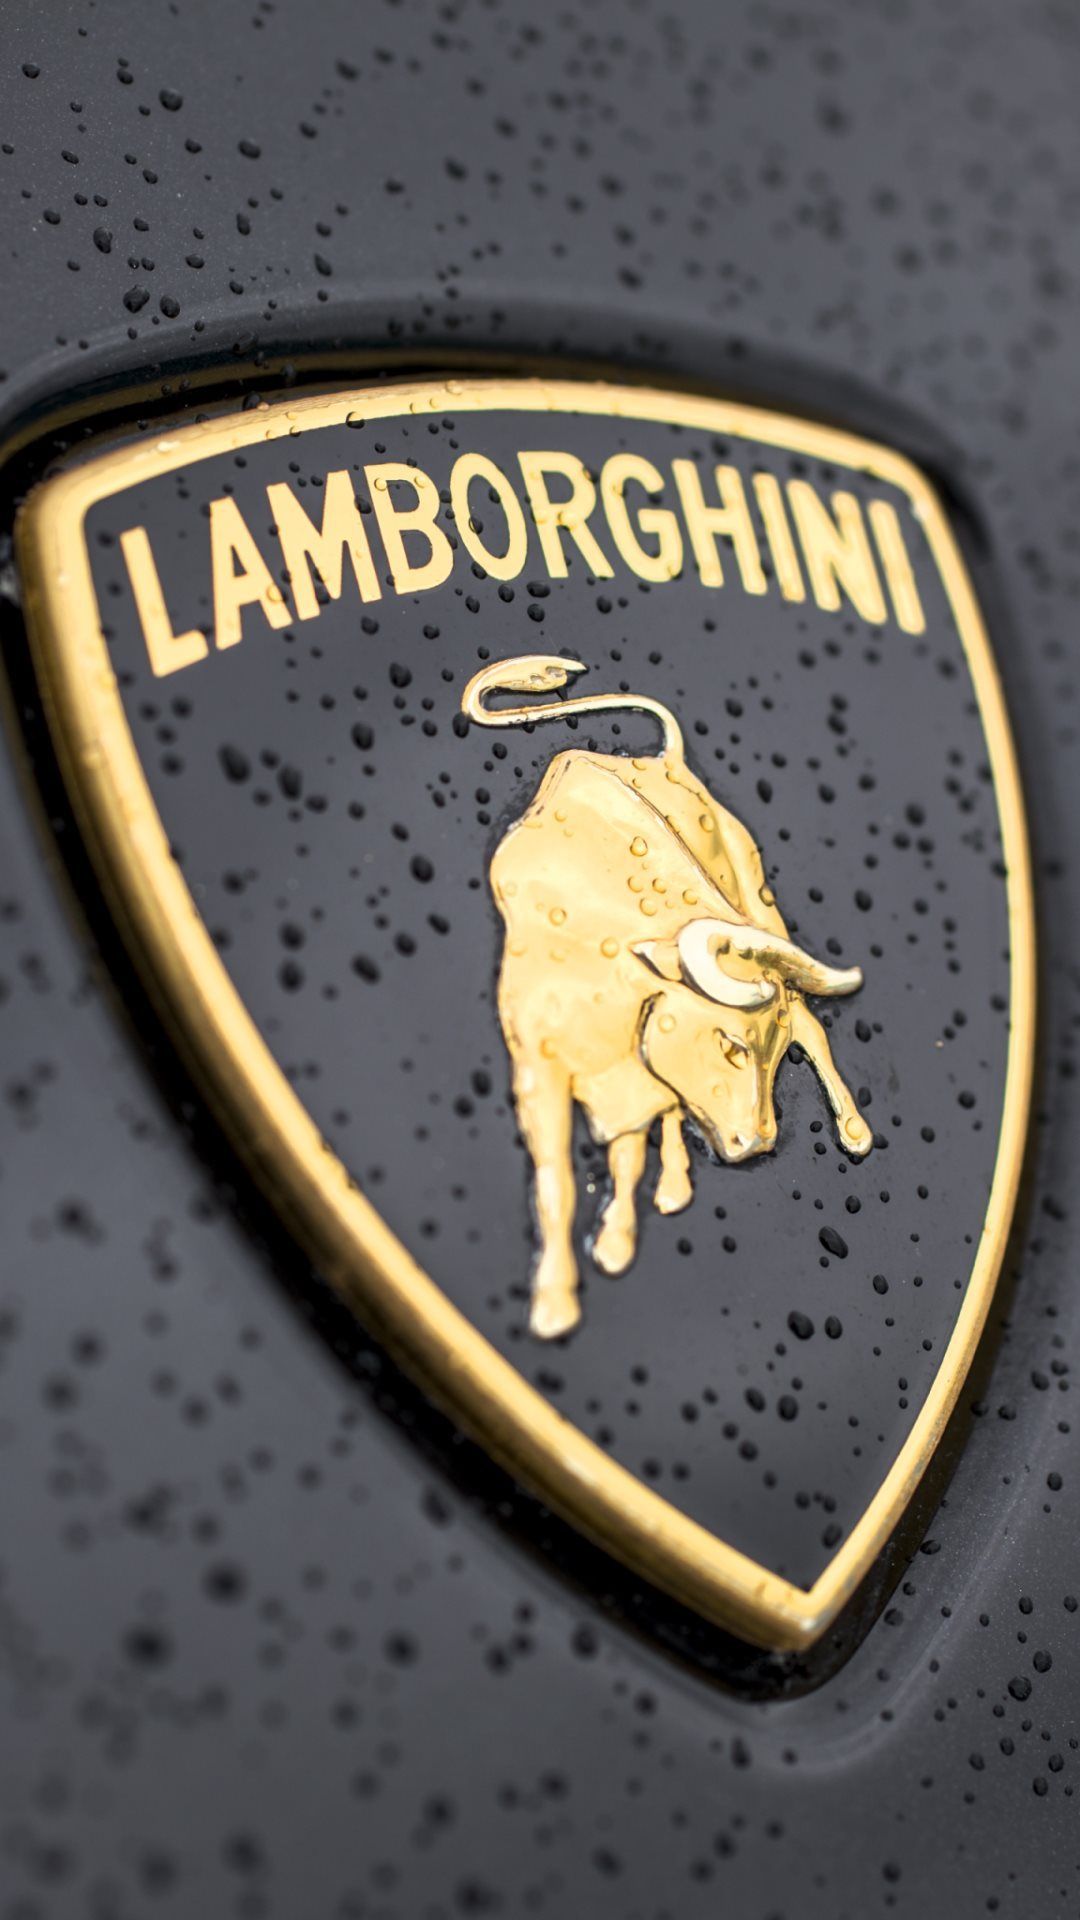 Lamborghini logo. Lamborghini logo, Lamborghini, Lamborghini cars